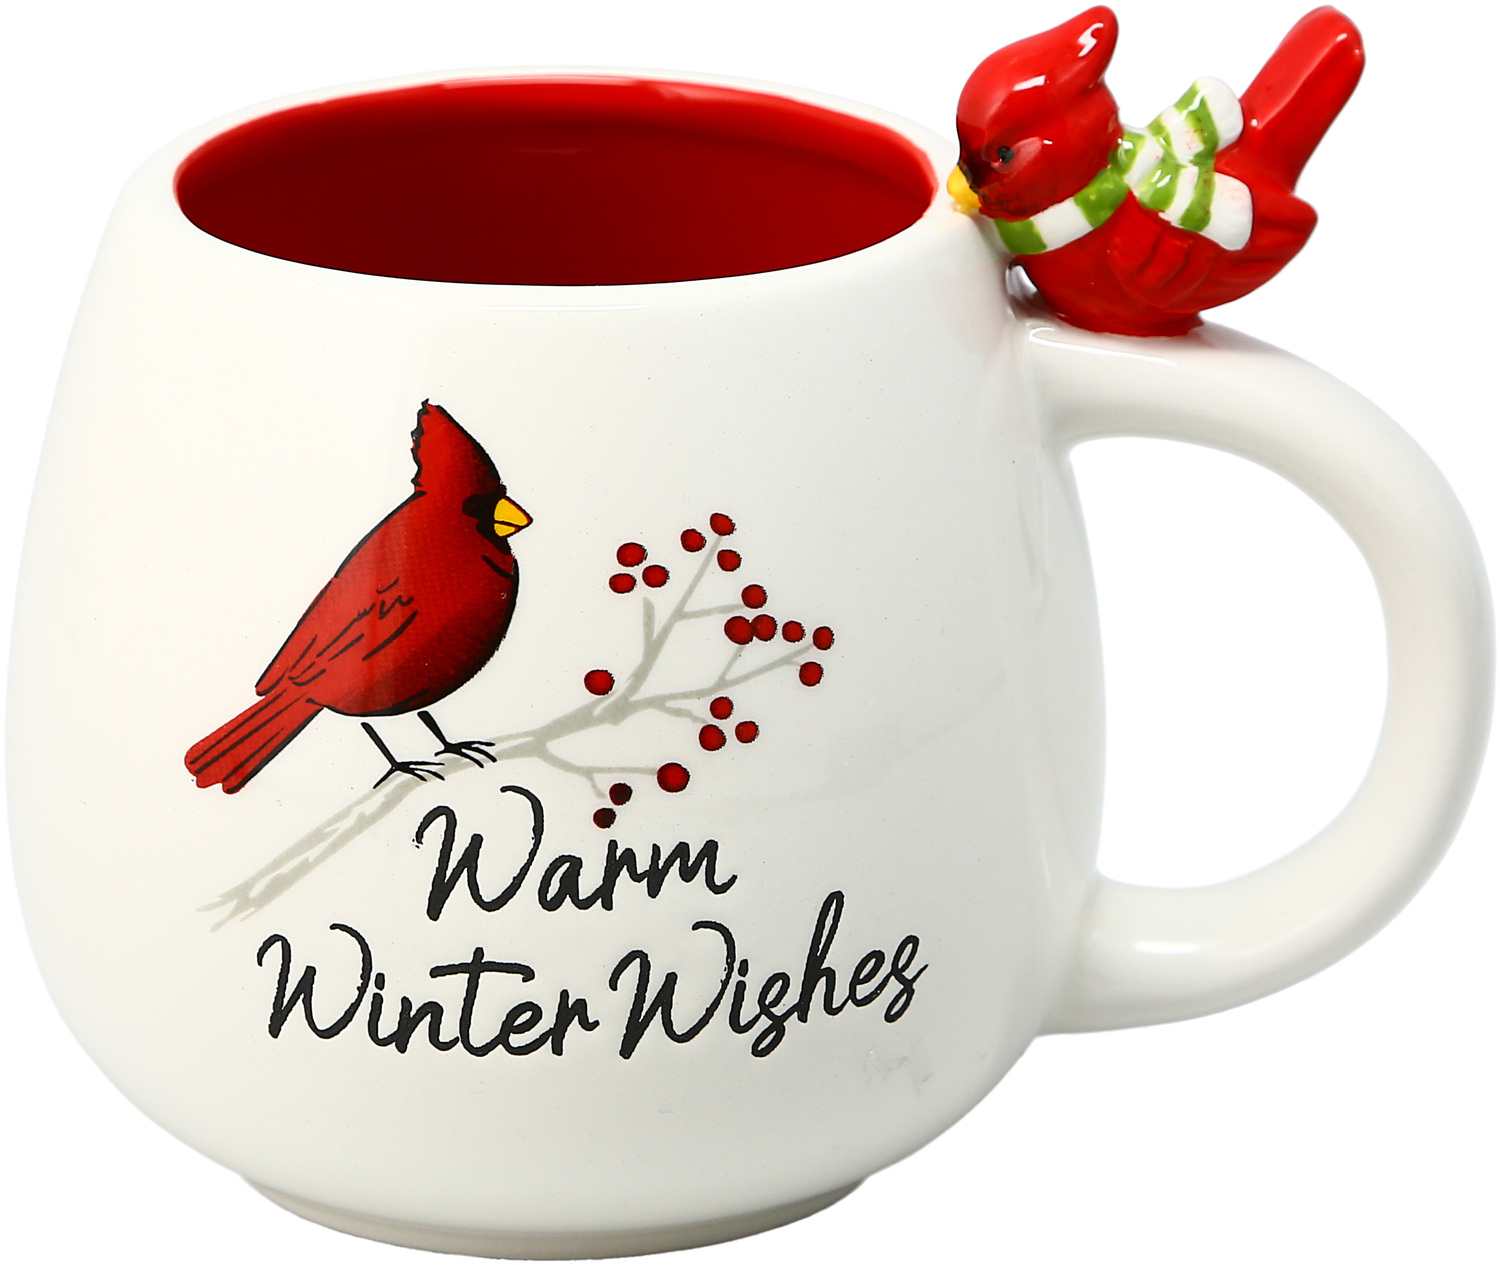 Warm Wishes by Pavilion's Pets - Warm Wishes - 15.5 oz Mug